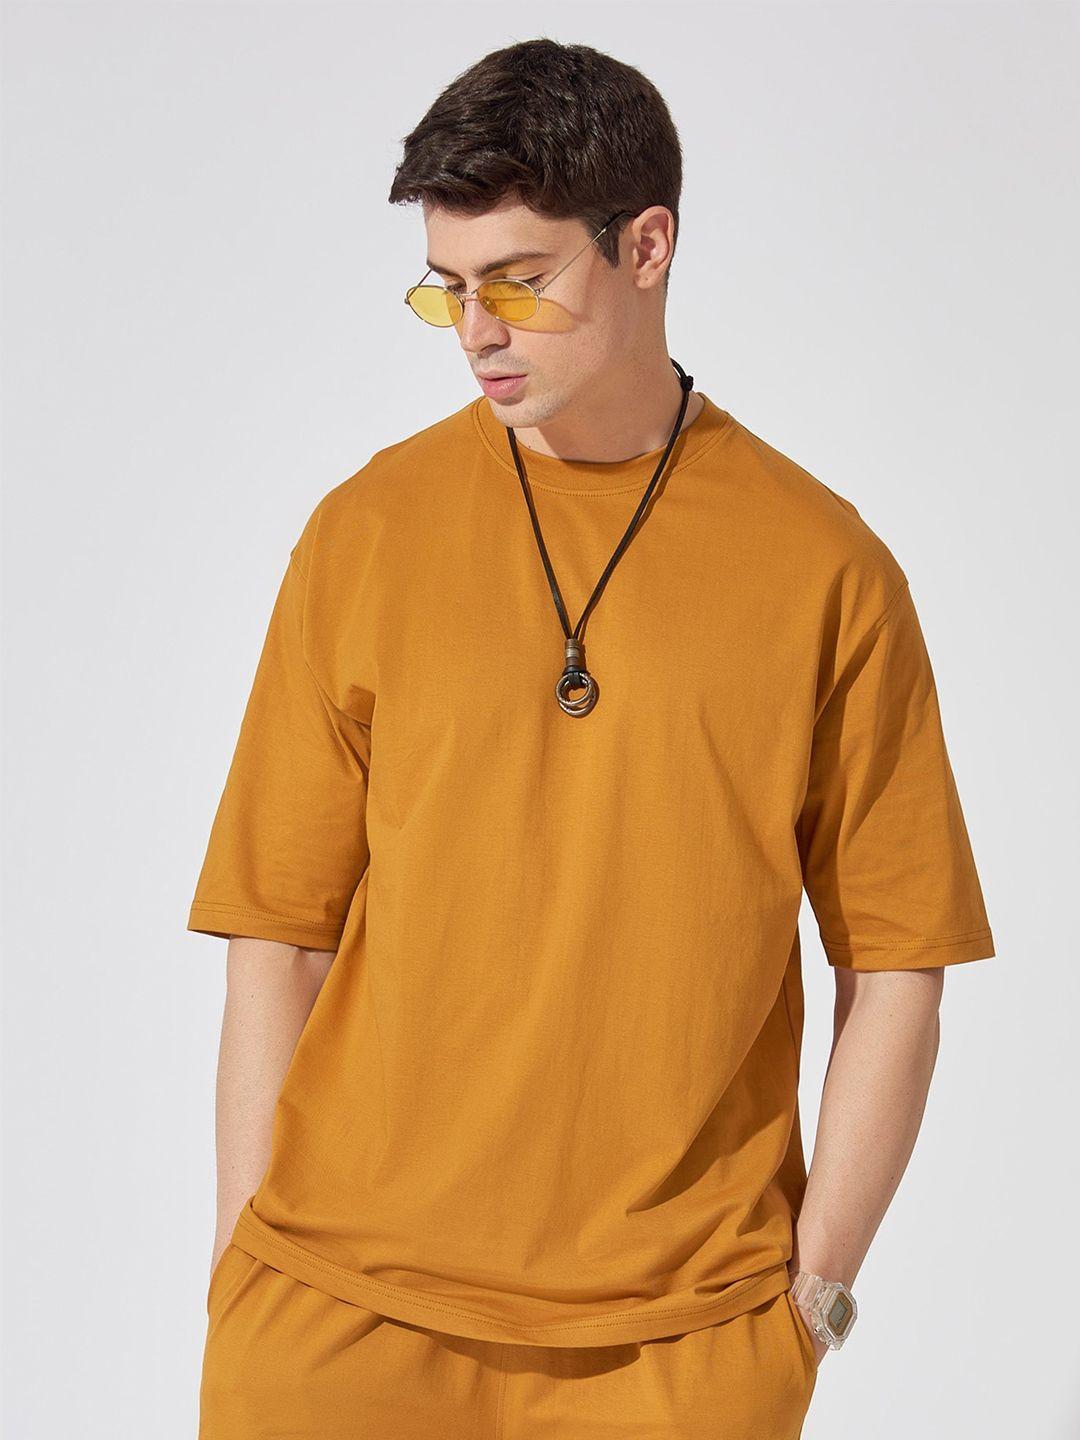 maniac round neck short sleeves cotton loose t-shirt